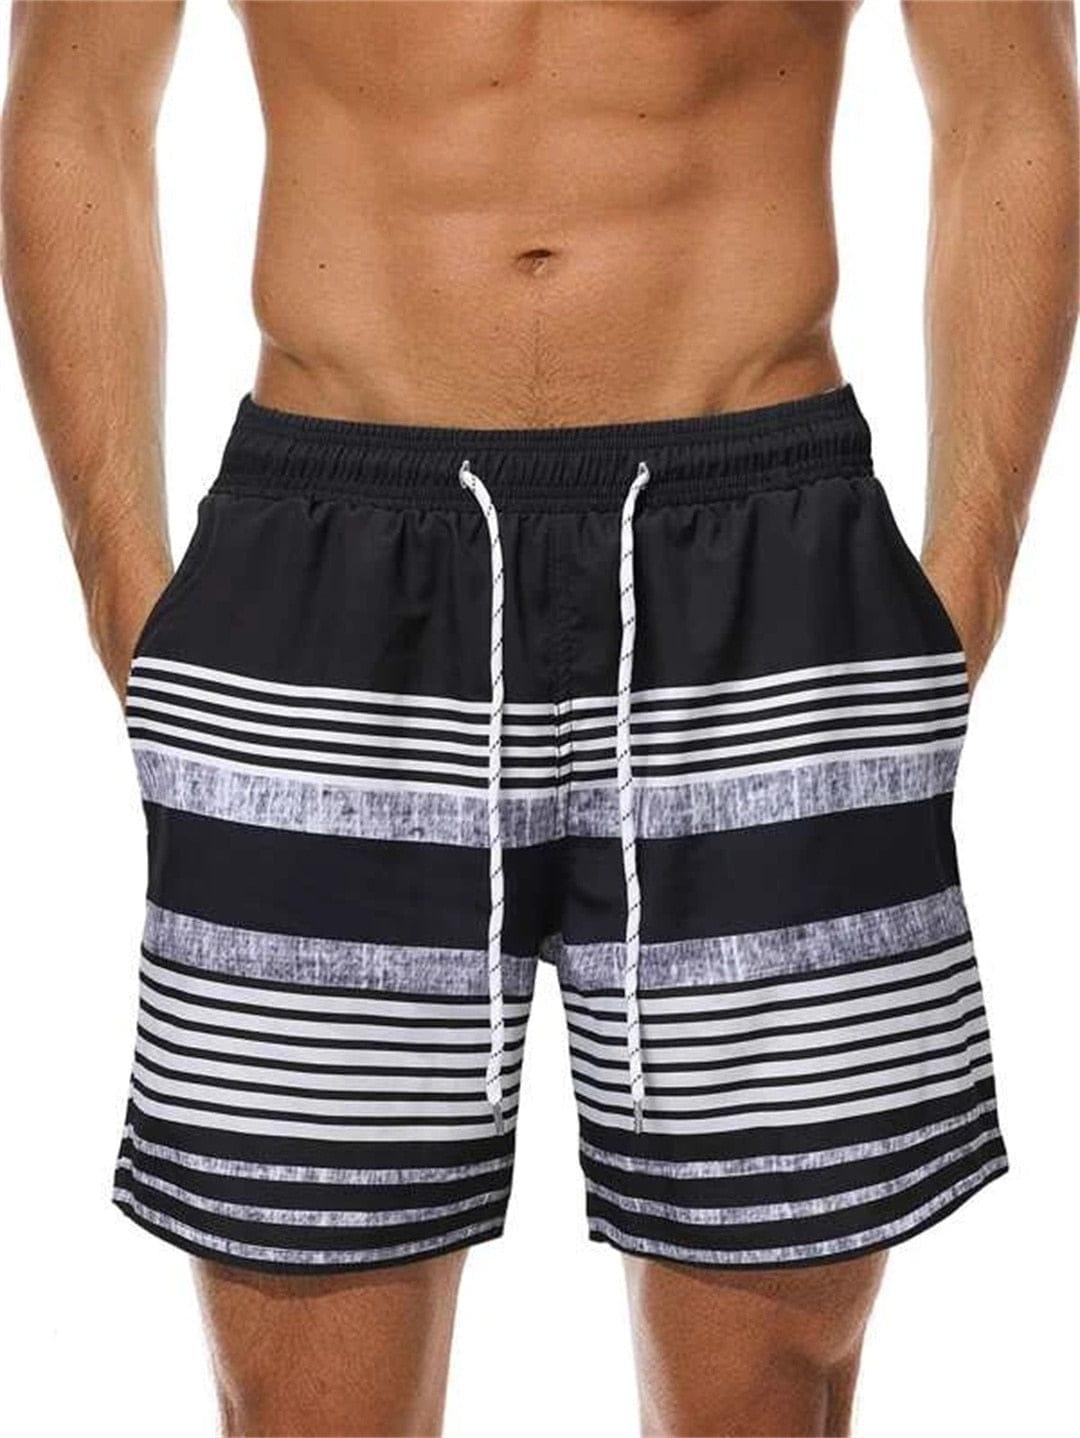 Jonathan short swim trunks (Plus sizes) Verso Black & White stripes S 